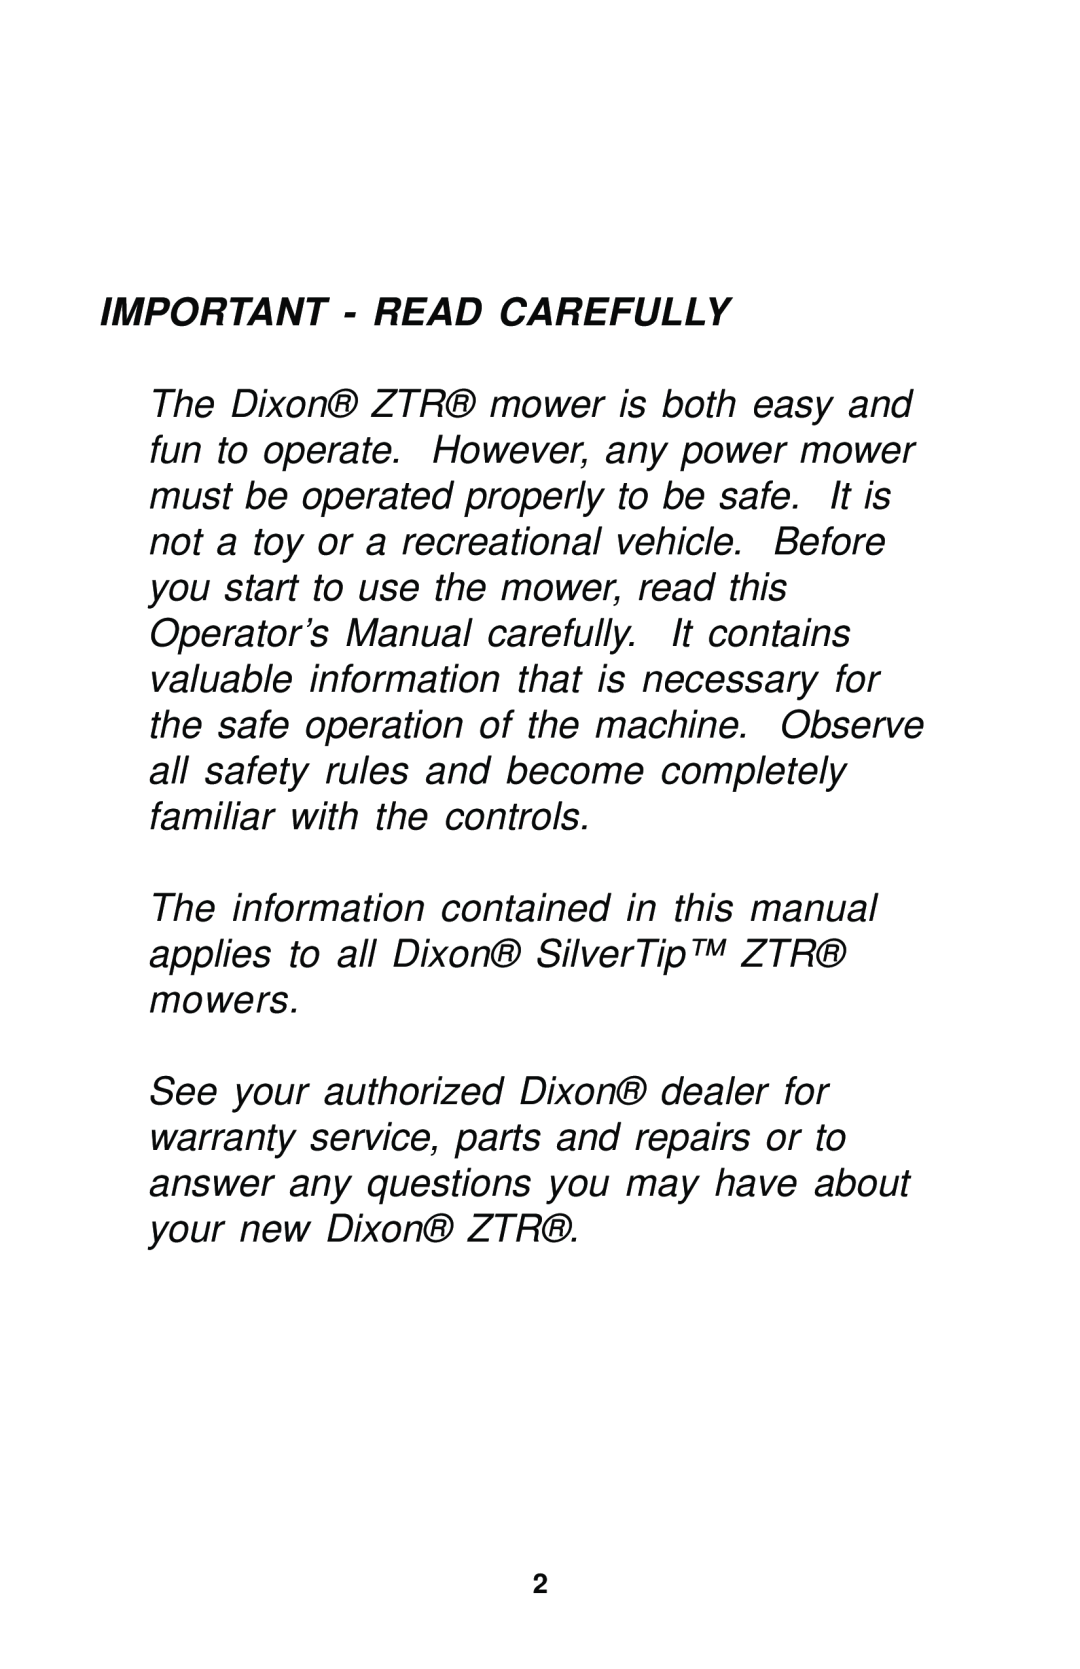 Dixon 12881-1104 manual Important - Read Carefully 